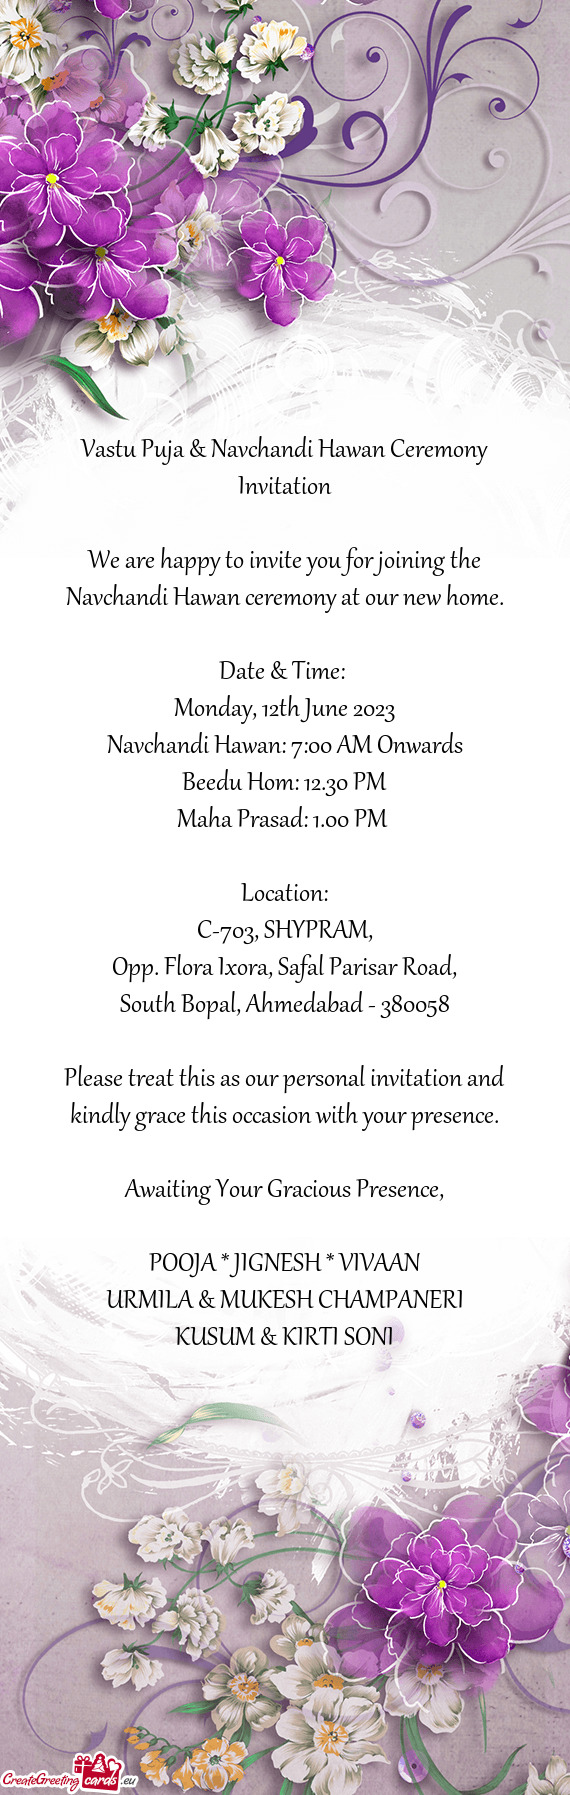 Vastu Puja & Navchandi Hawan Ceremony Invitation